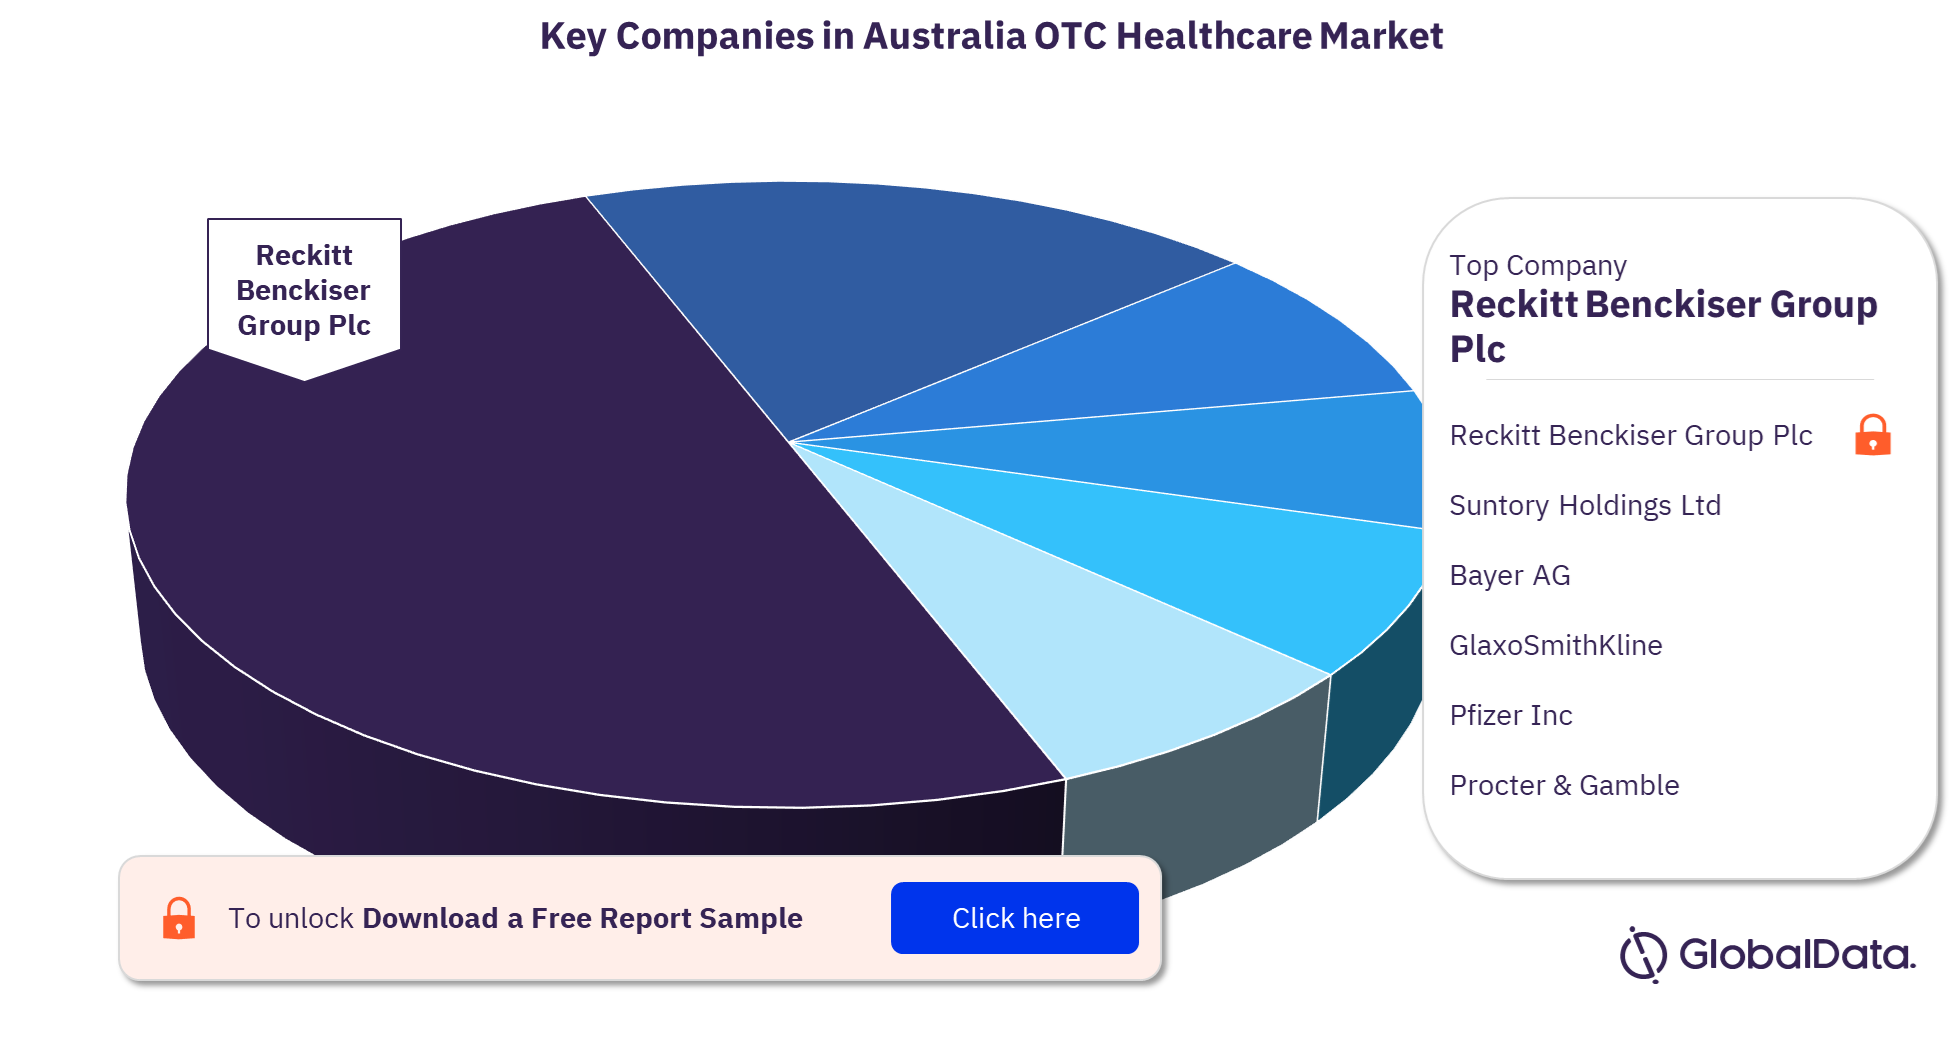 Australia OTC healthcare market analysis by companies